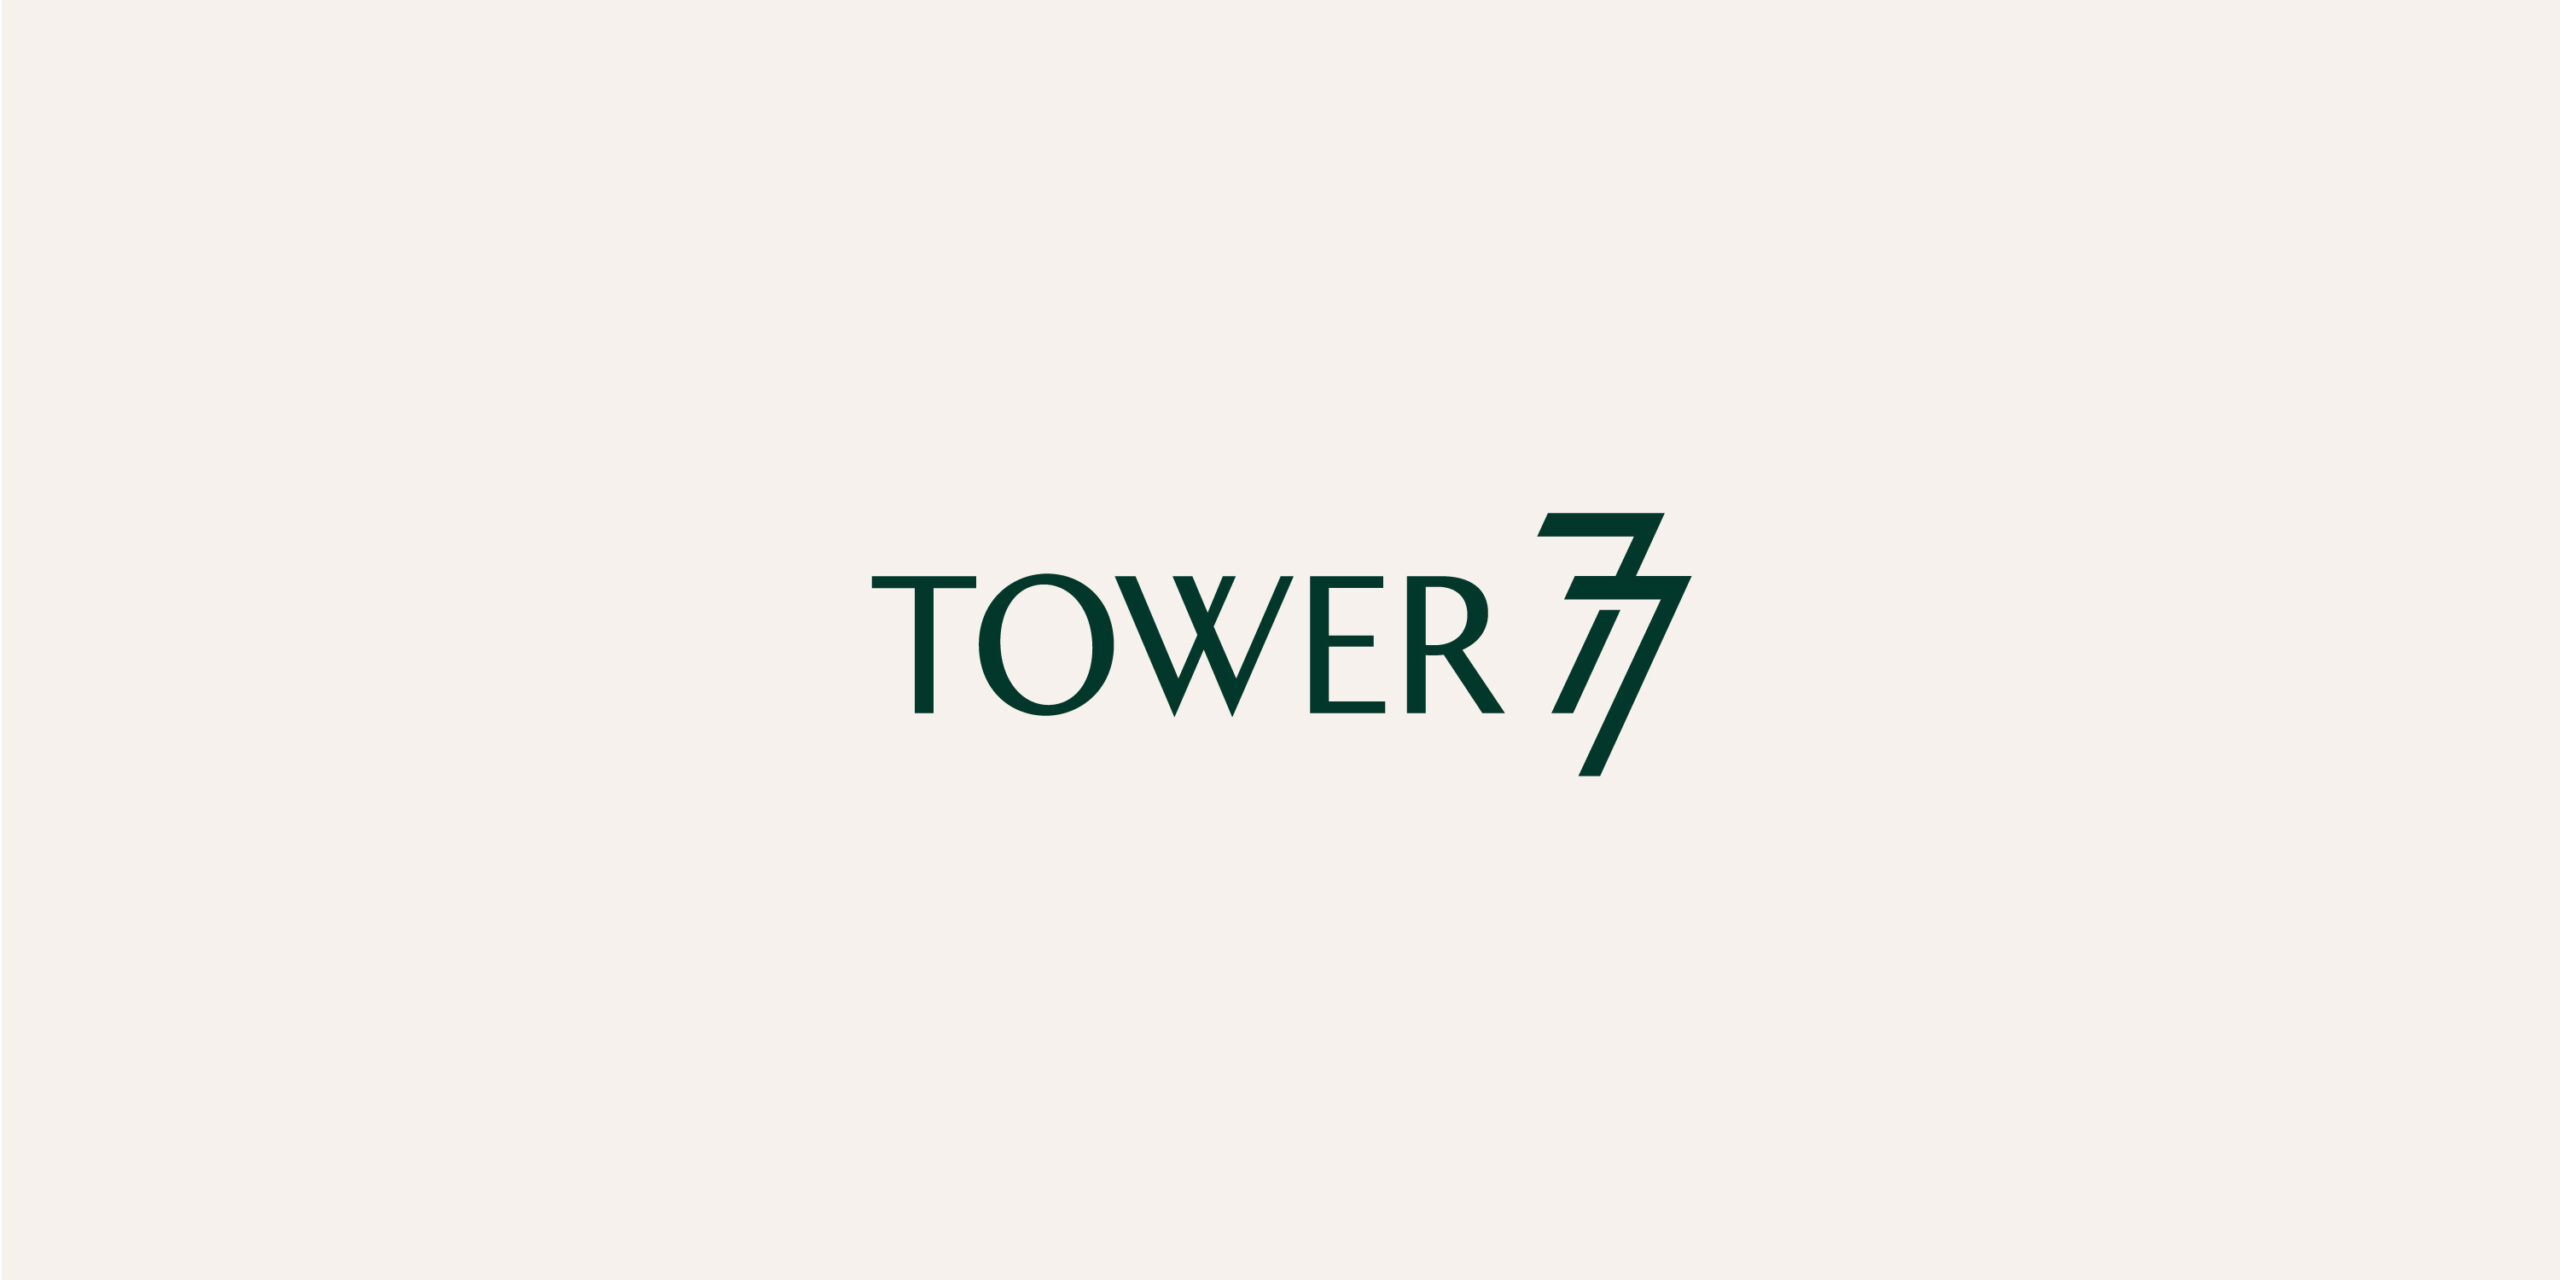 Tower-77-Identity-1